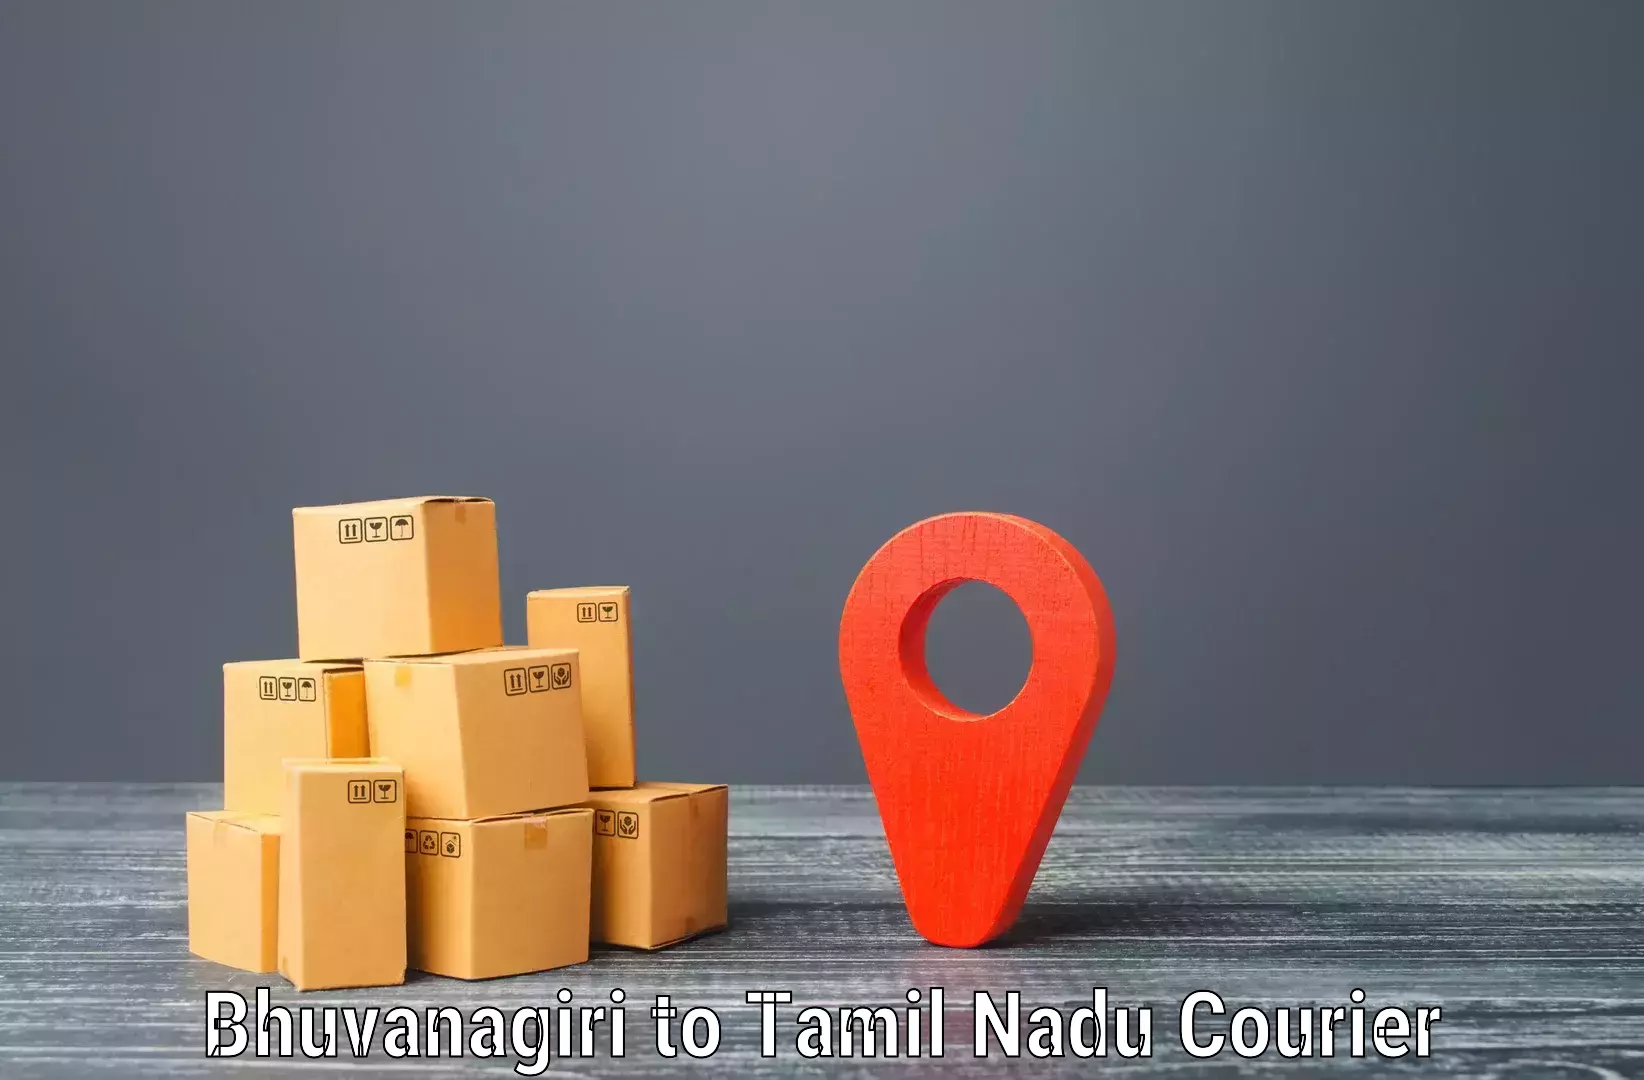 Logistics service provider Bhuvanagiri to Cuddalore